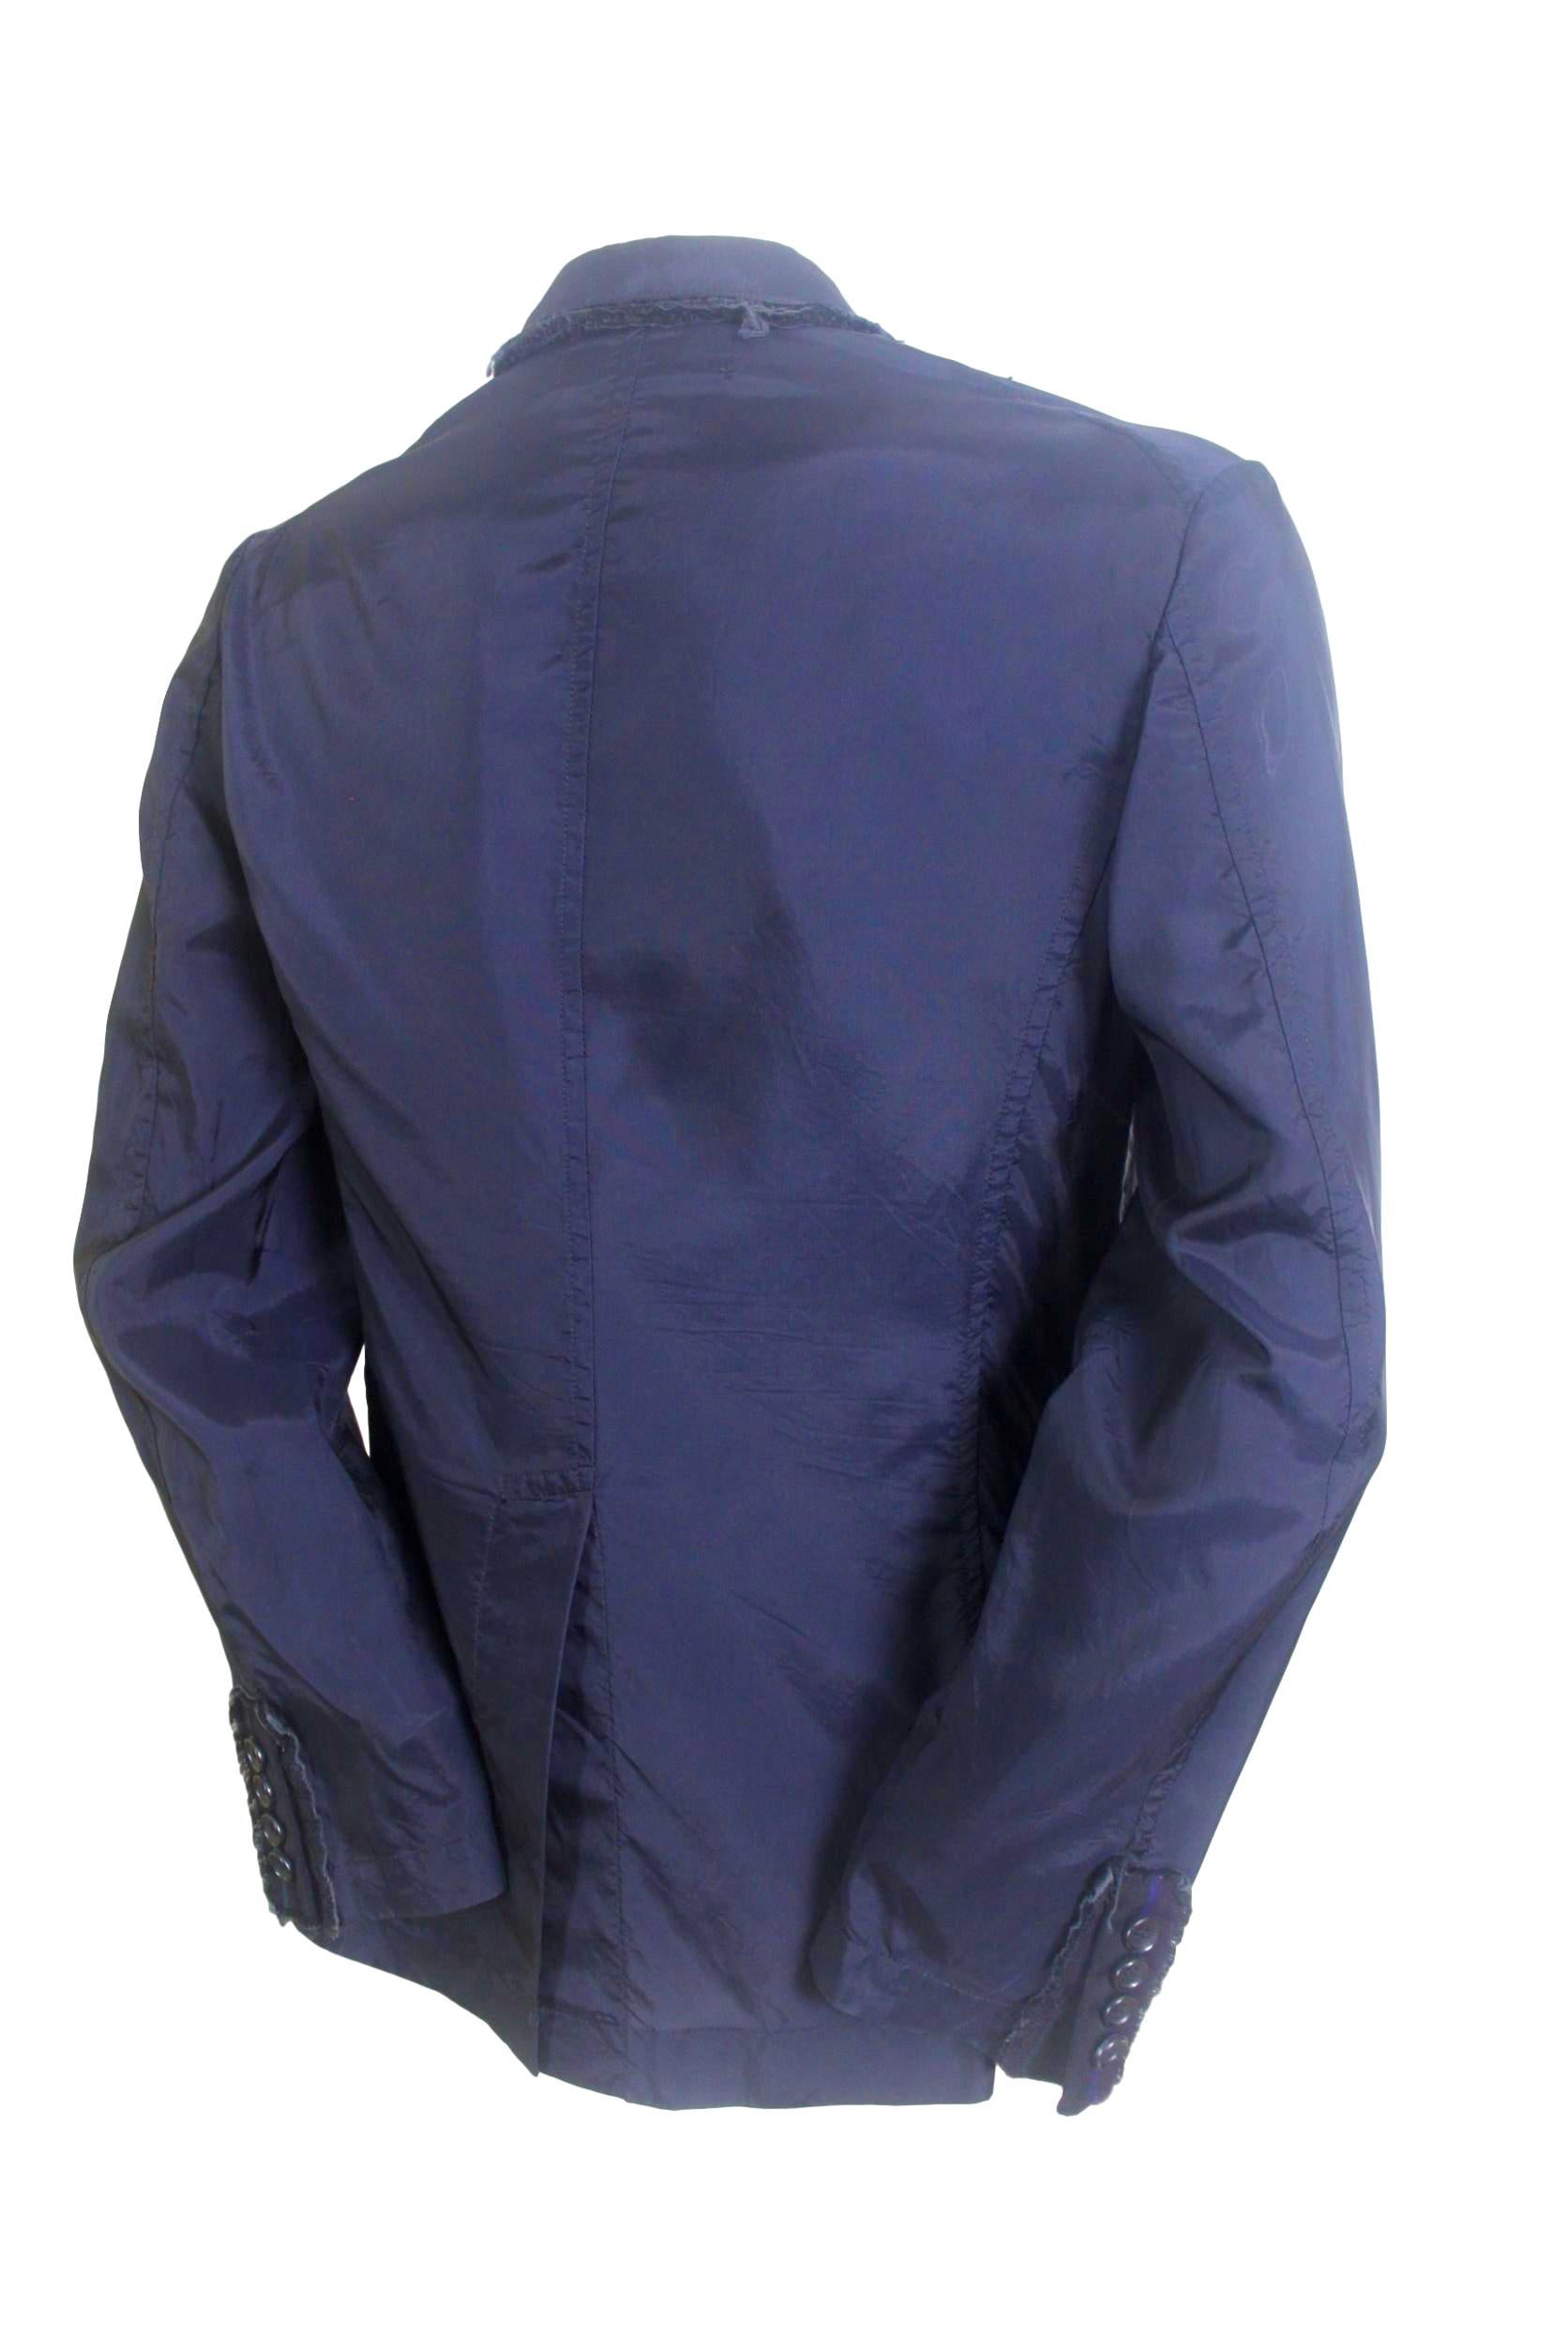 Comme des Garcons Tricot 2004 Cupro Deconstructed Jacket For Sale 1